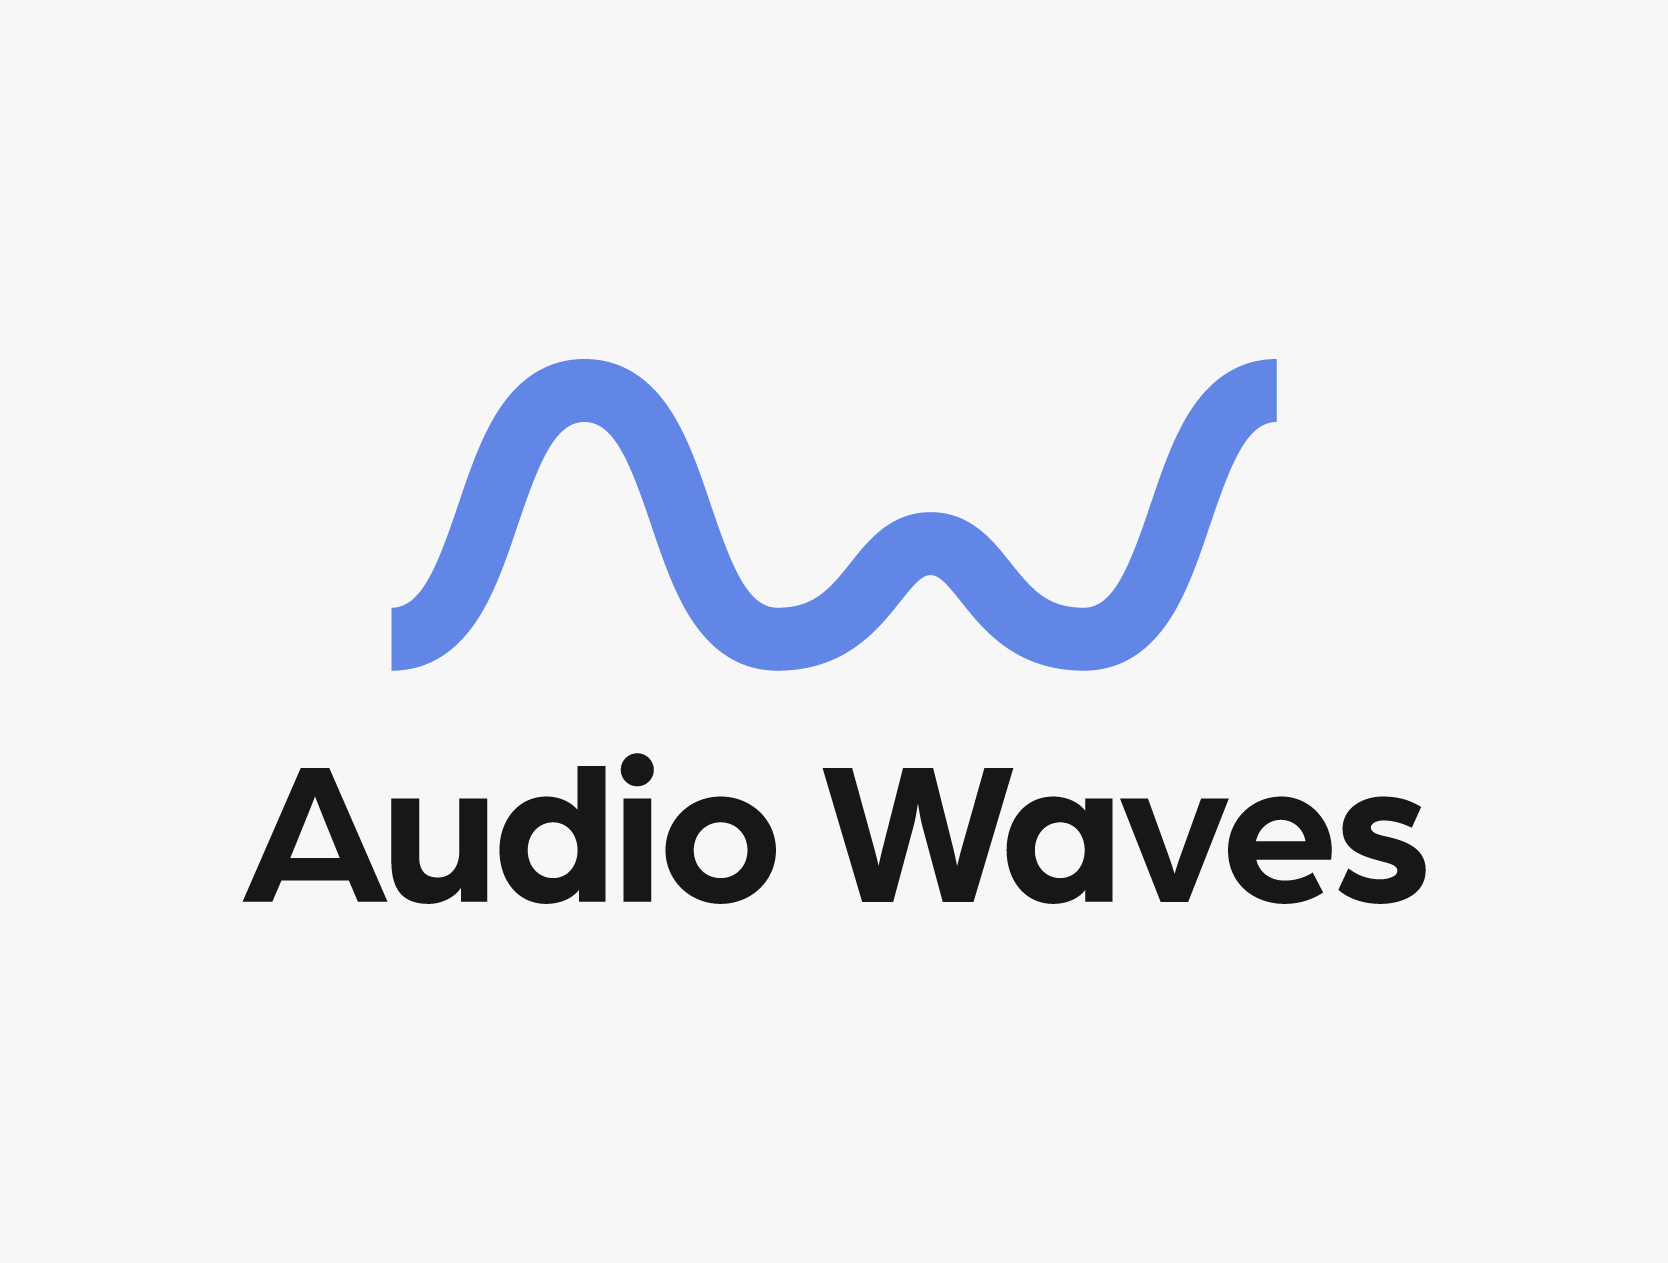 Audio waves logo